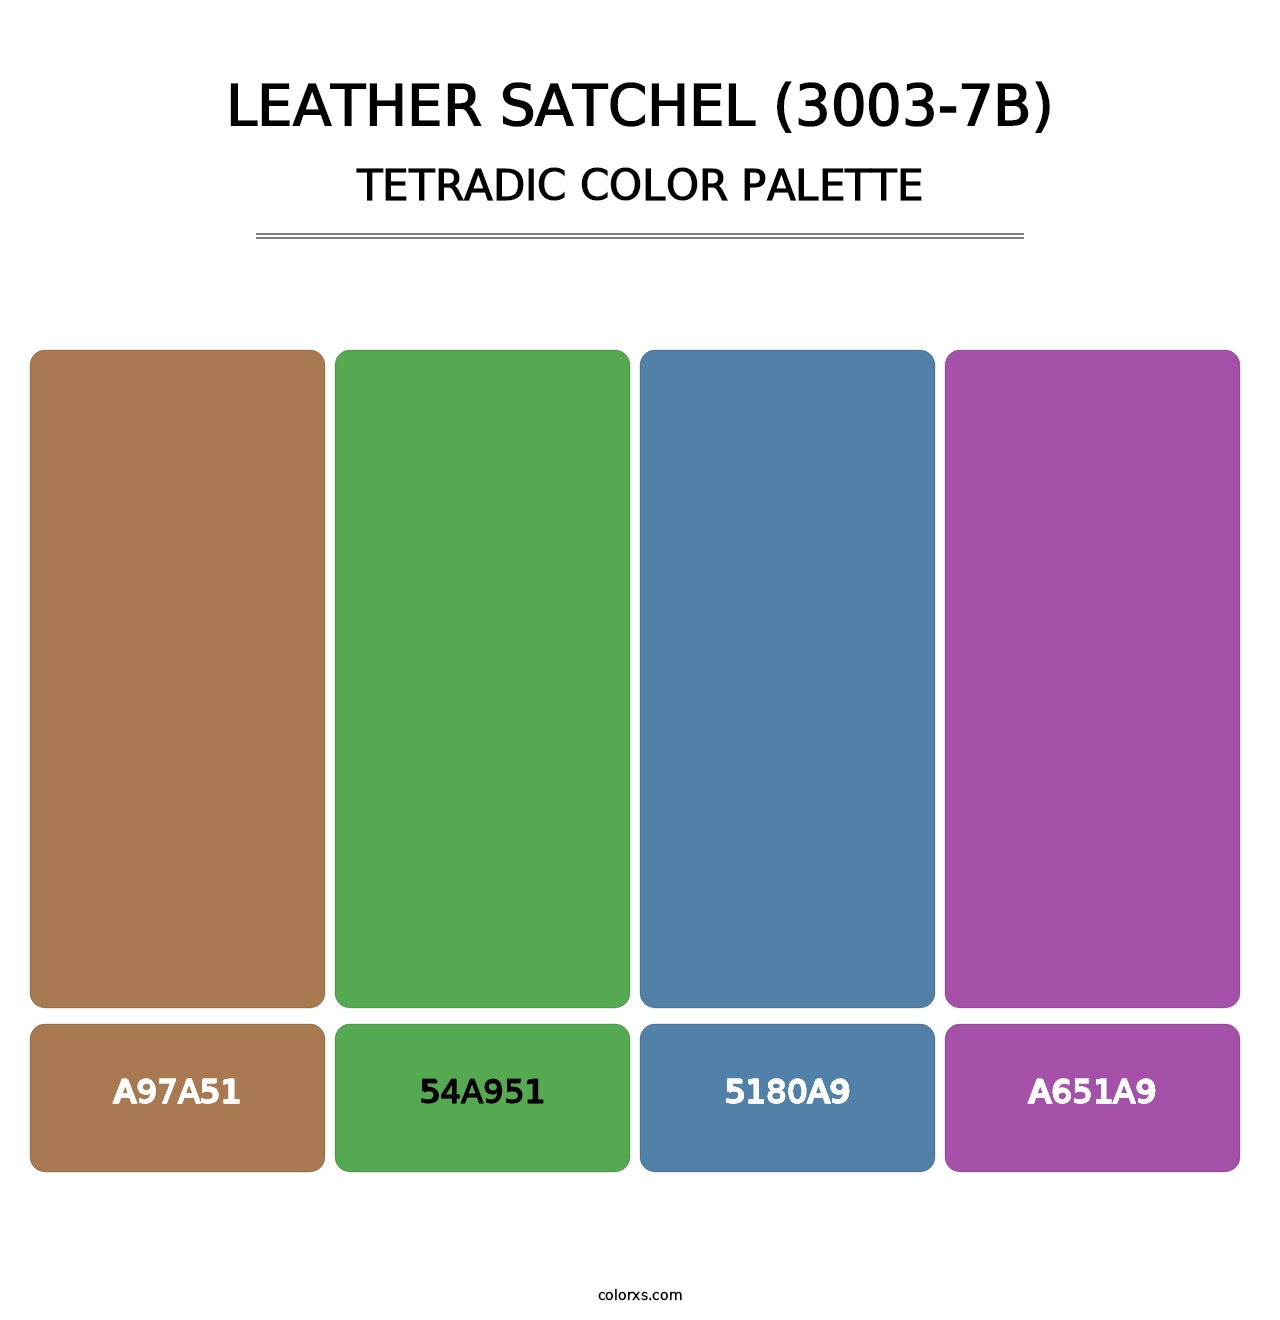 Leather Satchel (3003-7B) - Tetradic Color Palette